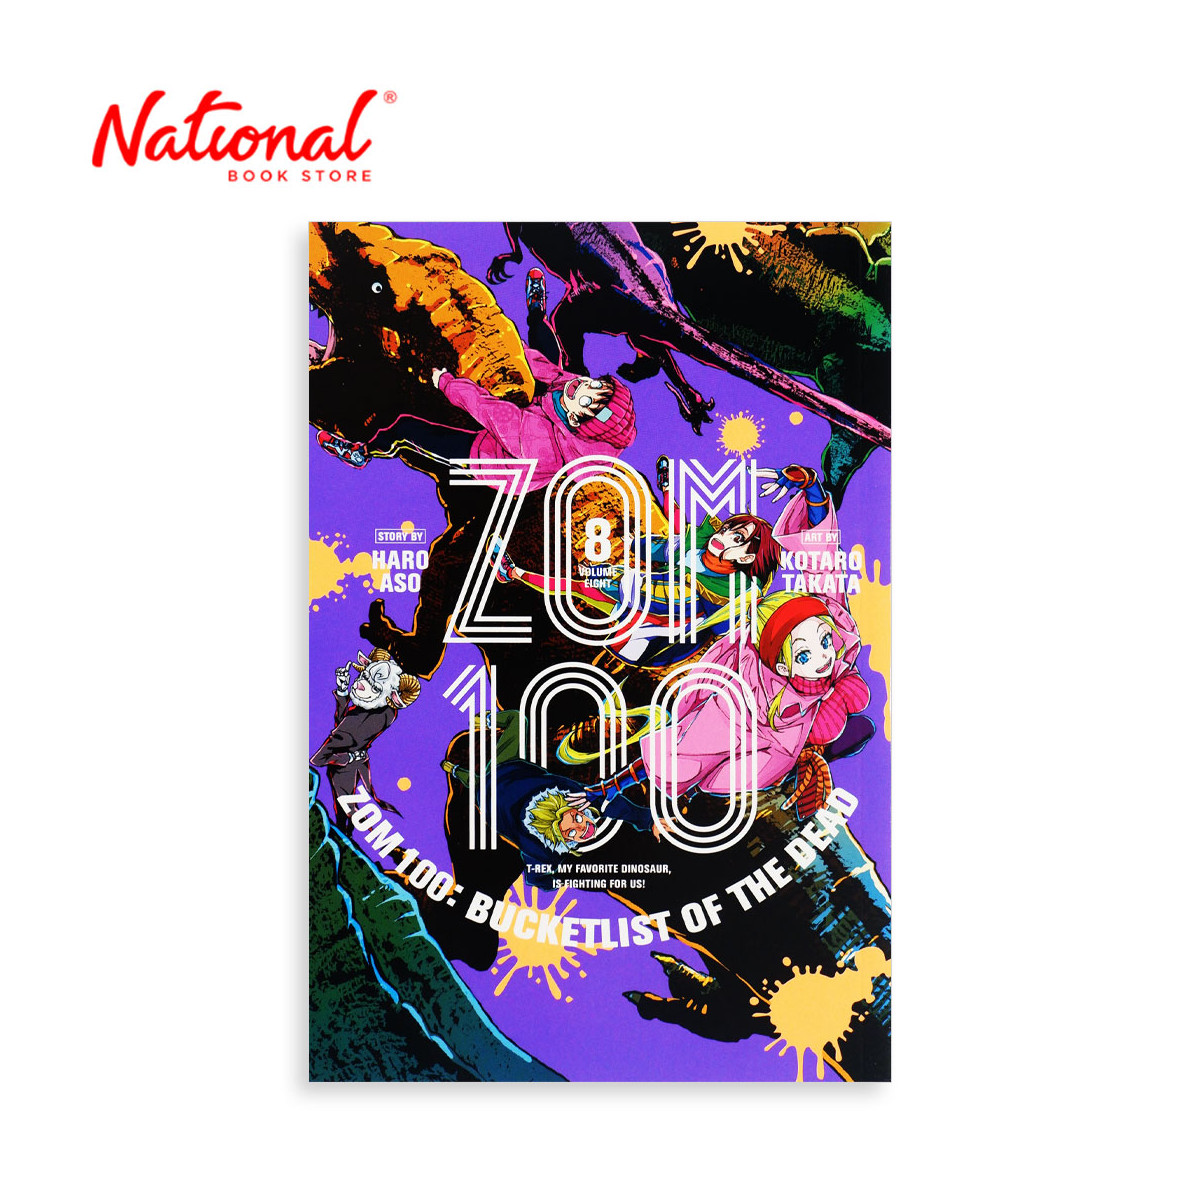 Zom 100 Volume 8 by Yugo Kobayashi - Trade Paperback - Manga - Comics